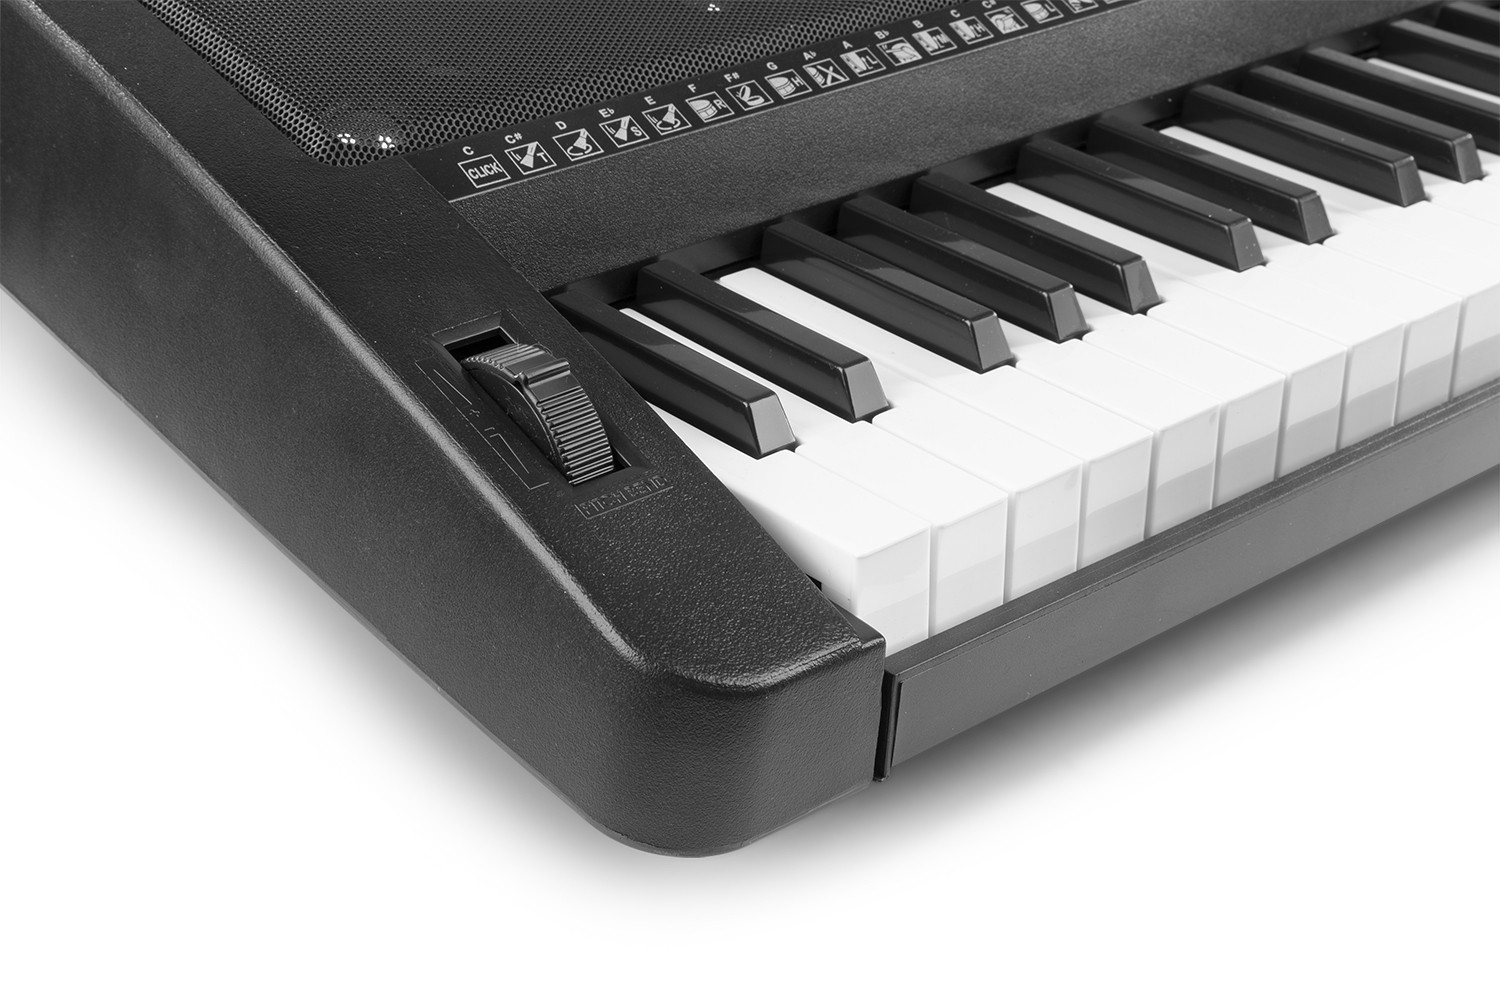 Orgão Teclado Musical Electrónico (61 Teclas) KB12P - MAX